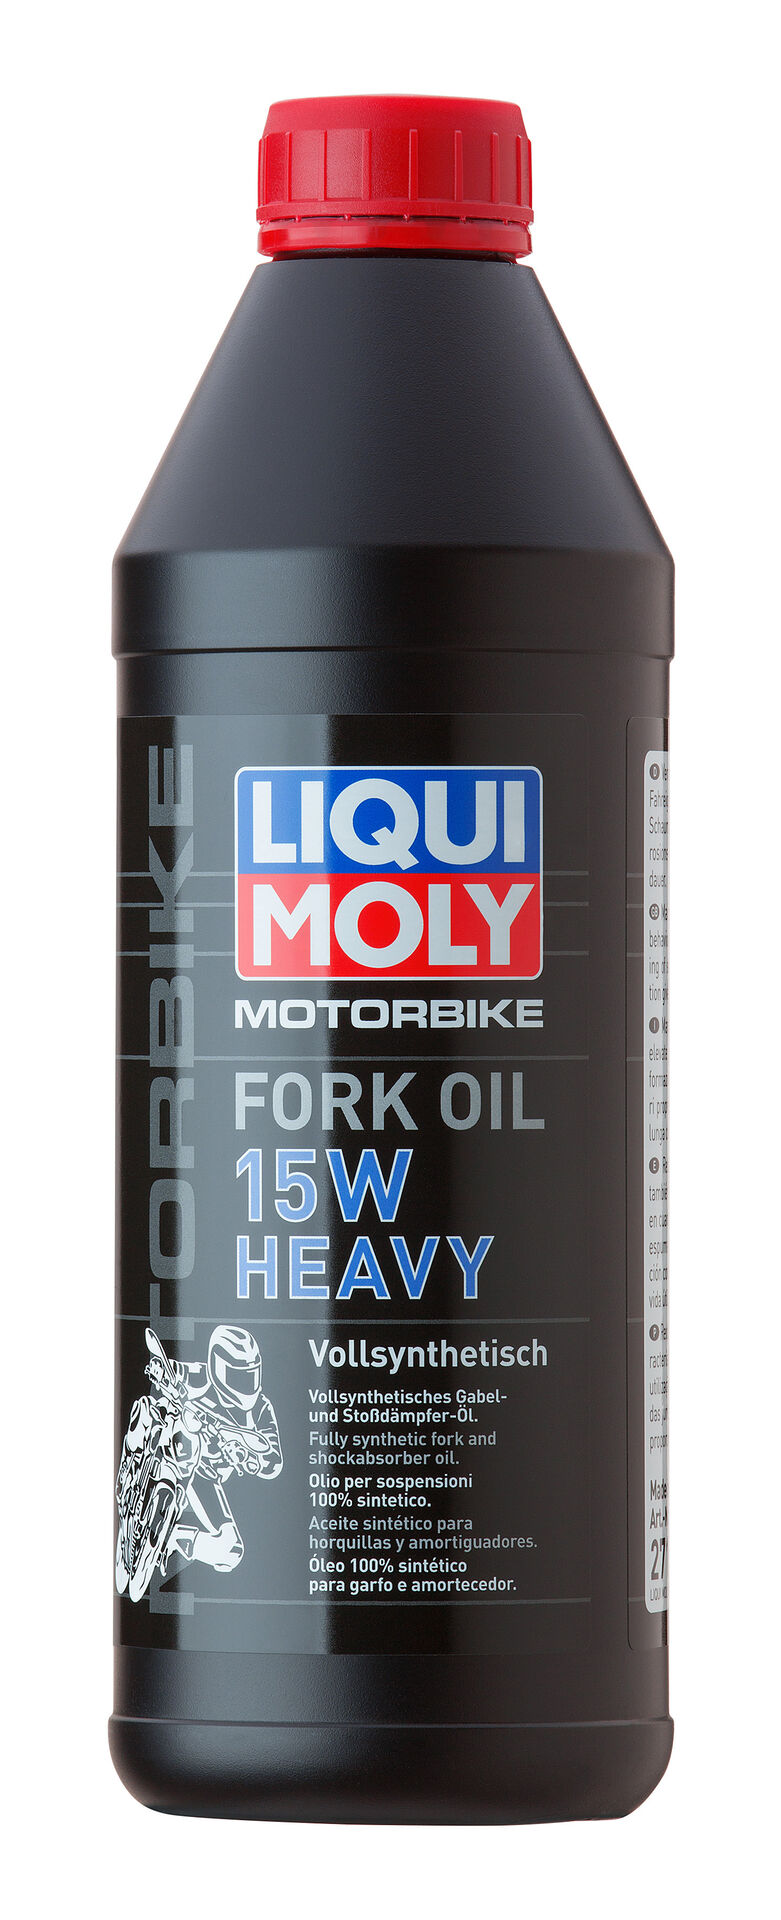 Liqui Moly Motorbike Fork Oil 15W heavy Gabelöl Stoßdämpferöl 1L